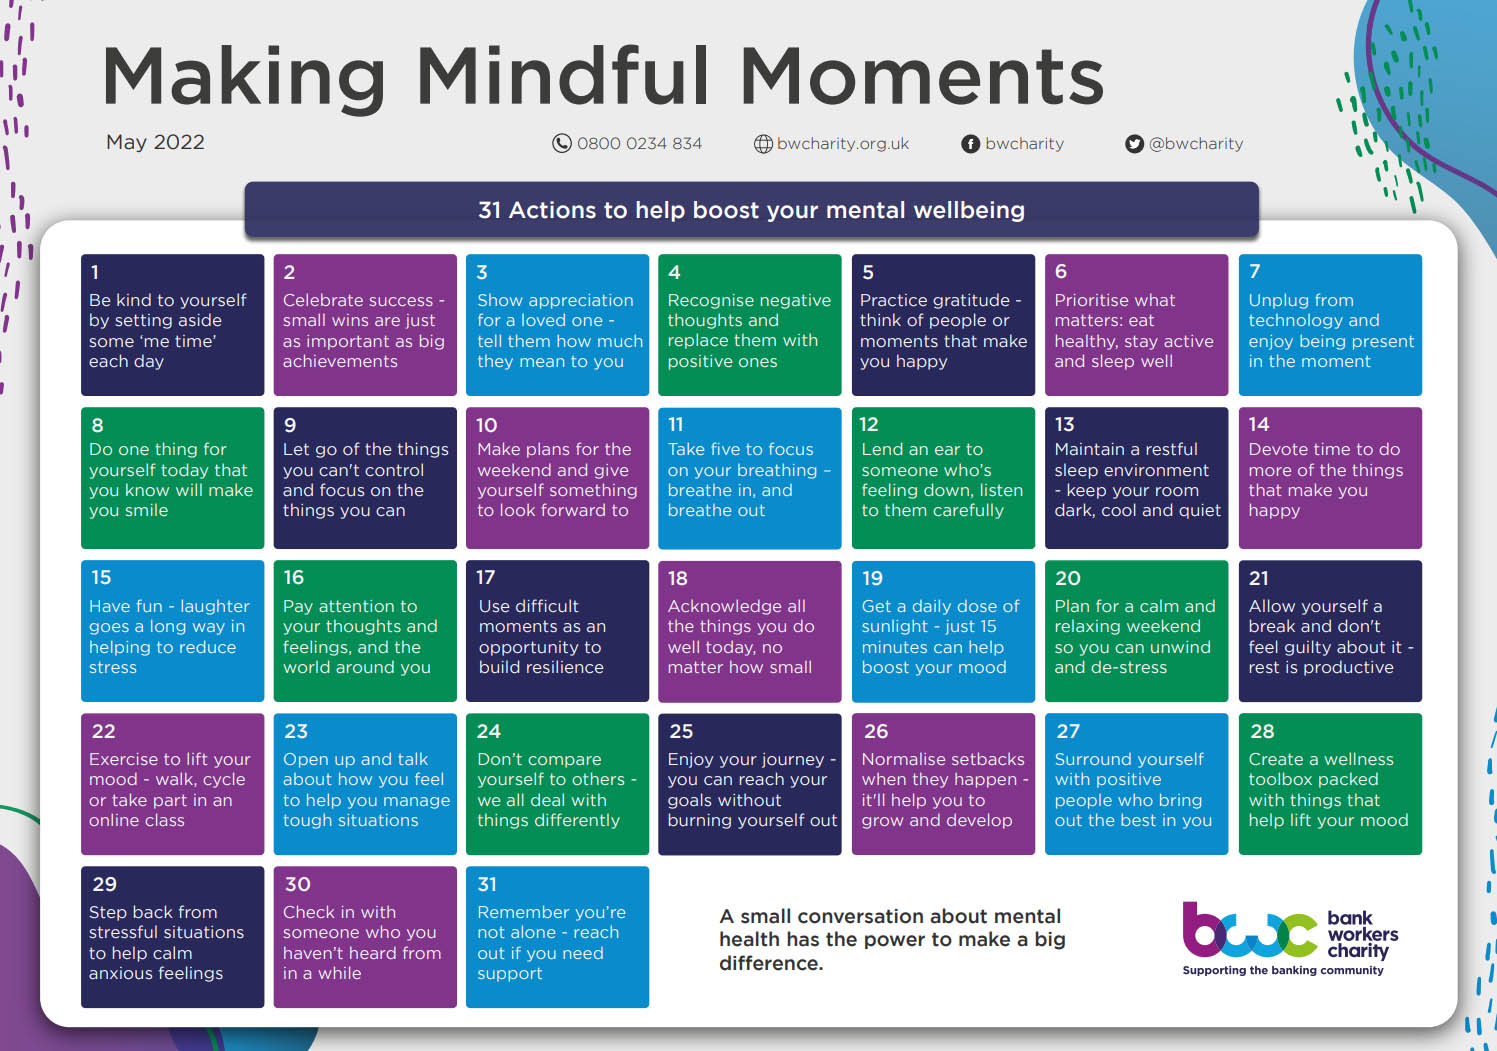 BWC making mindful moments calendar 2022